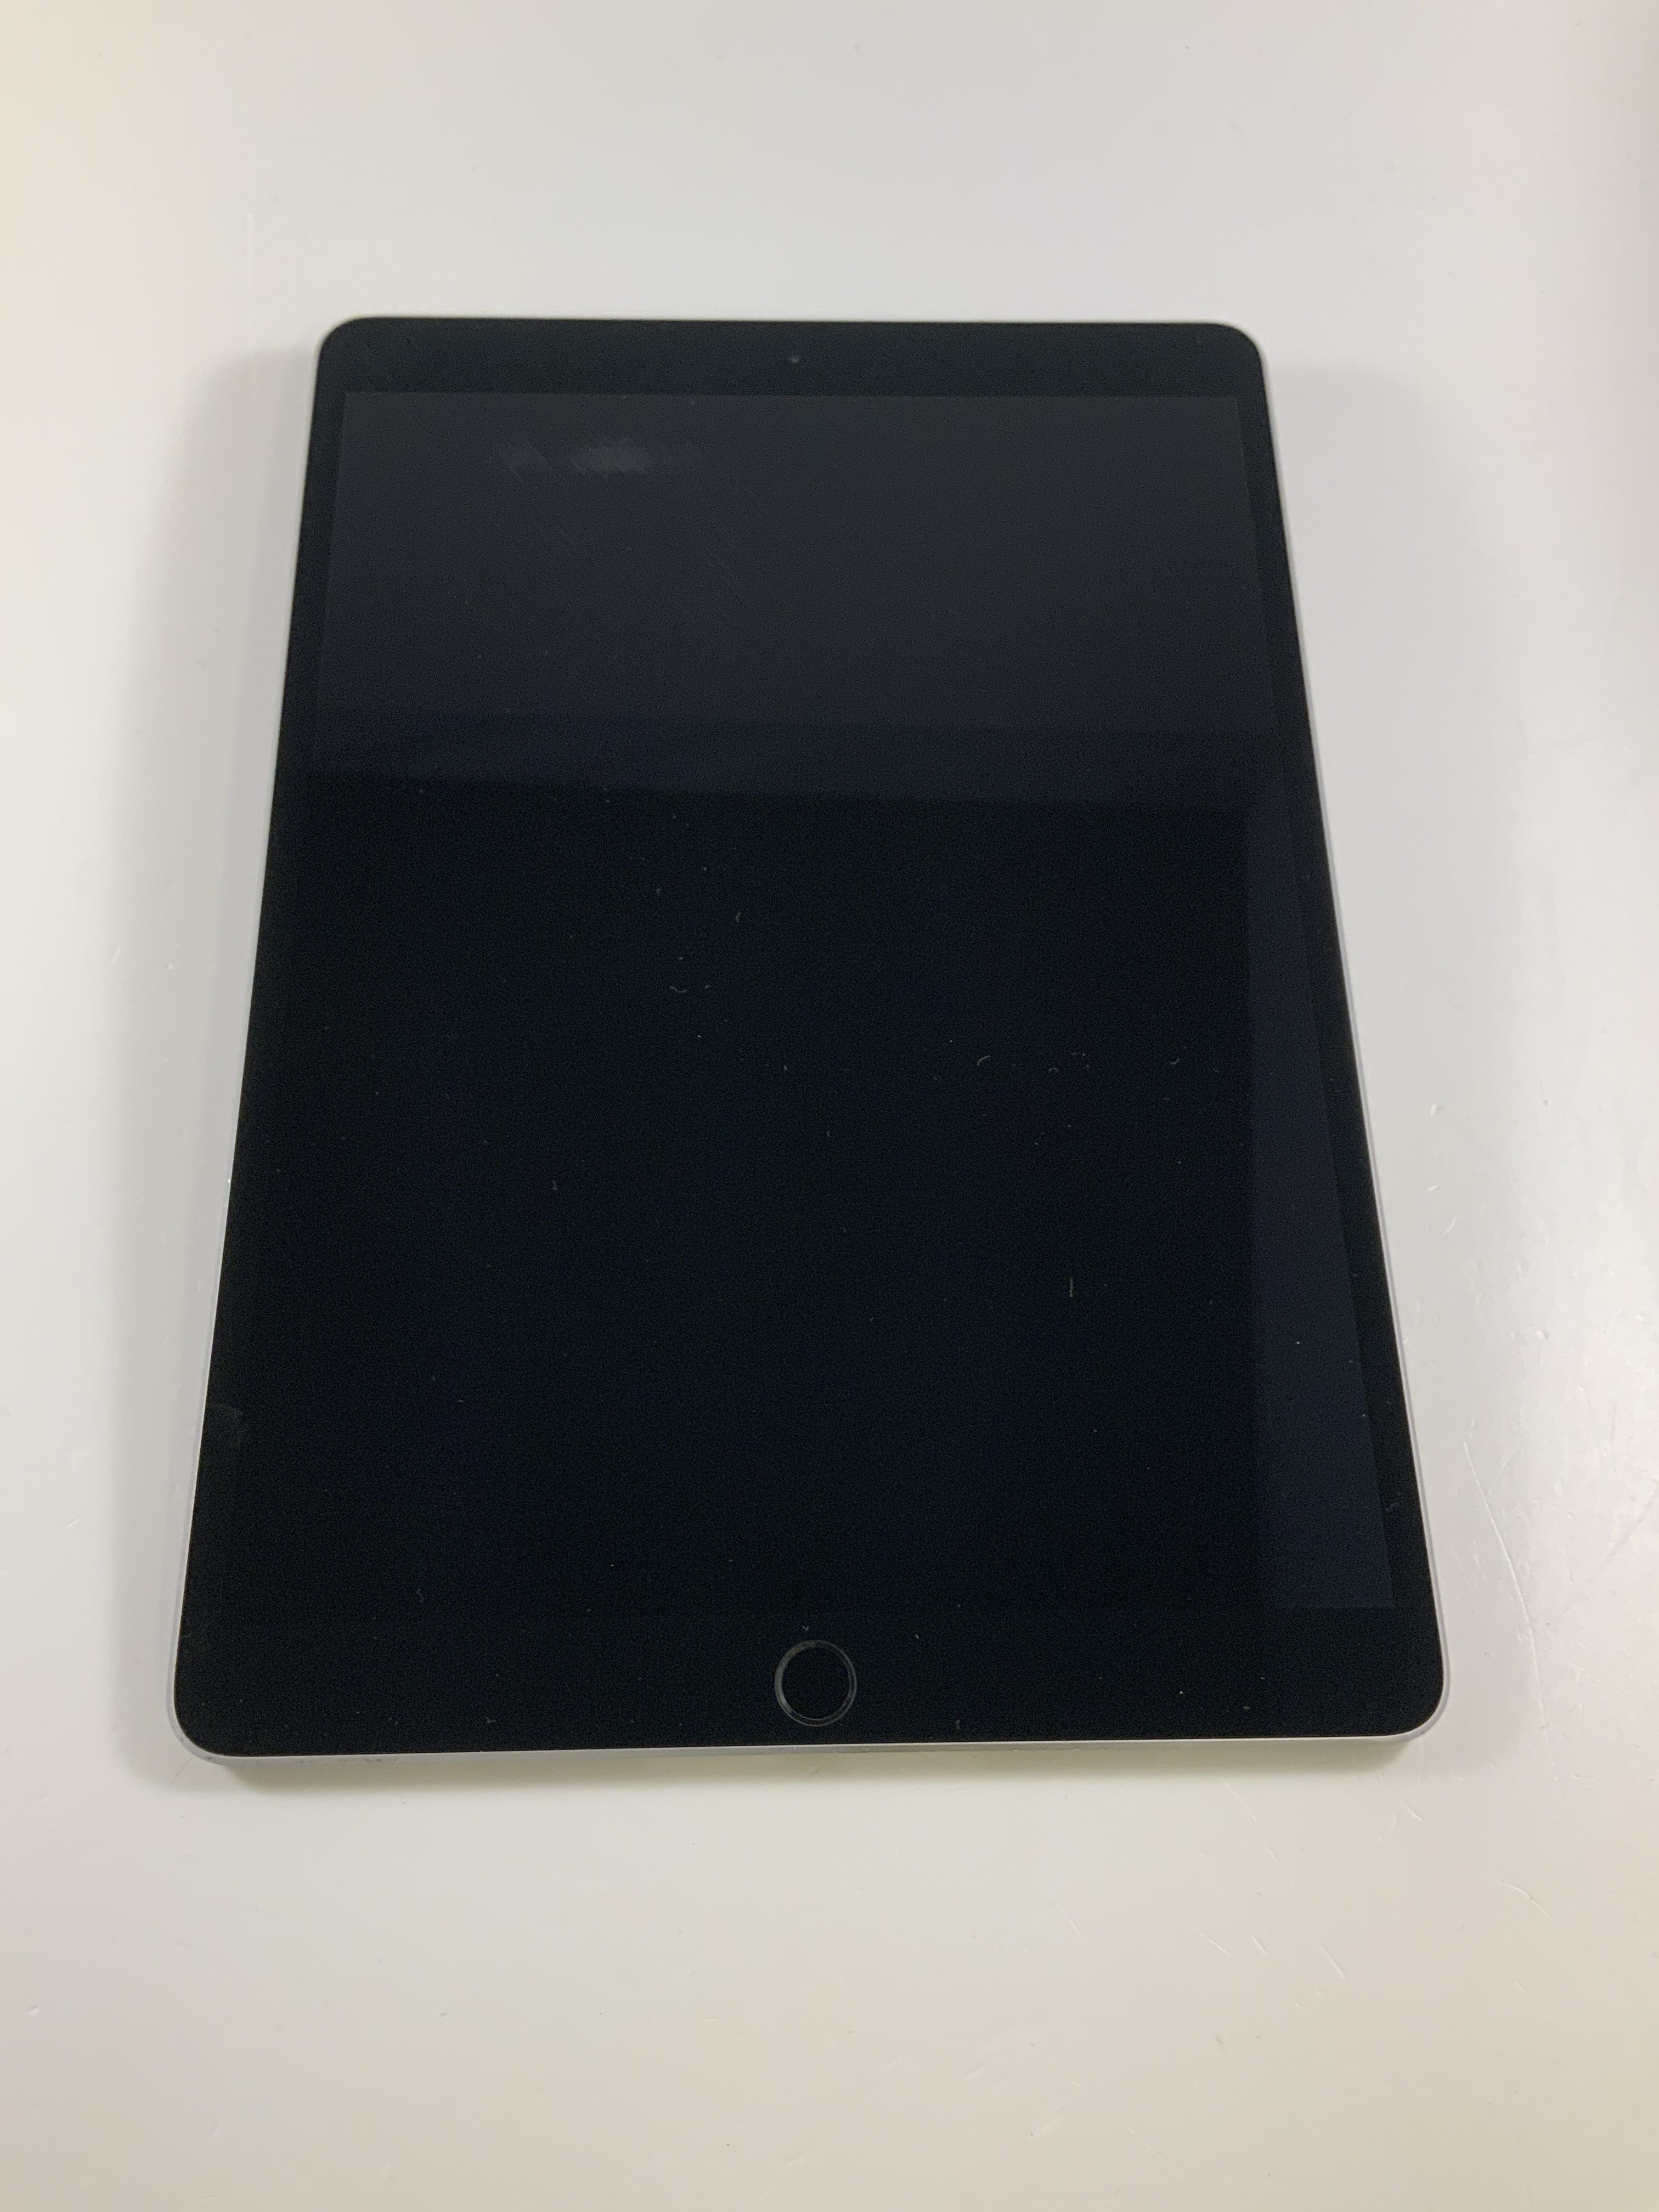 iPad Pro 10.5" Wi-Fi + Cellular 64GB, 64GB, Space Gray, bild 1